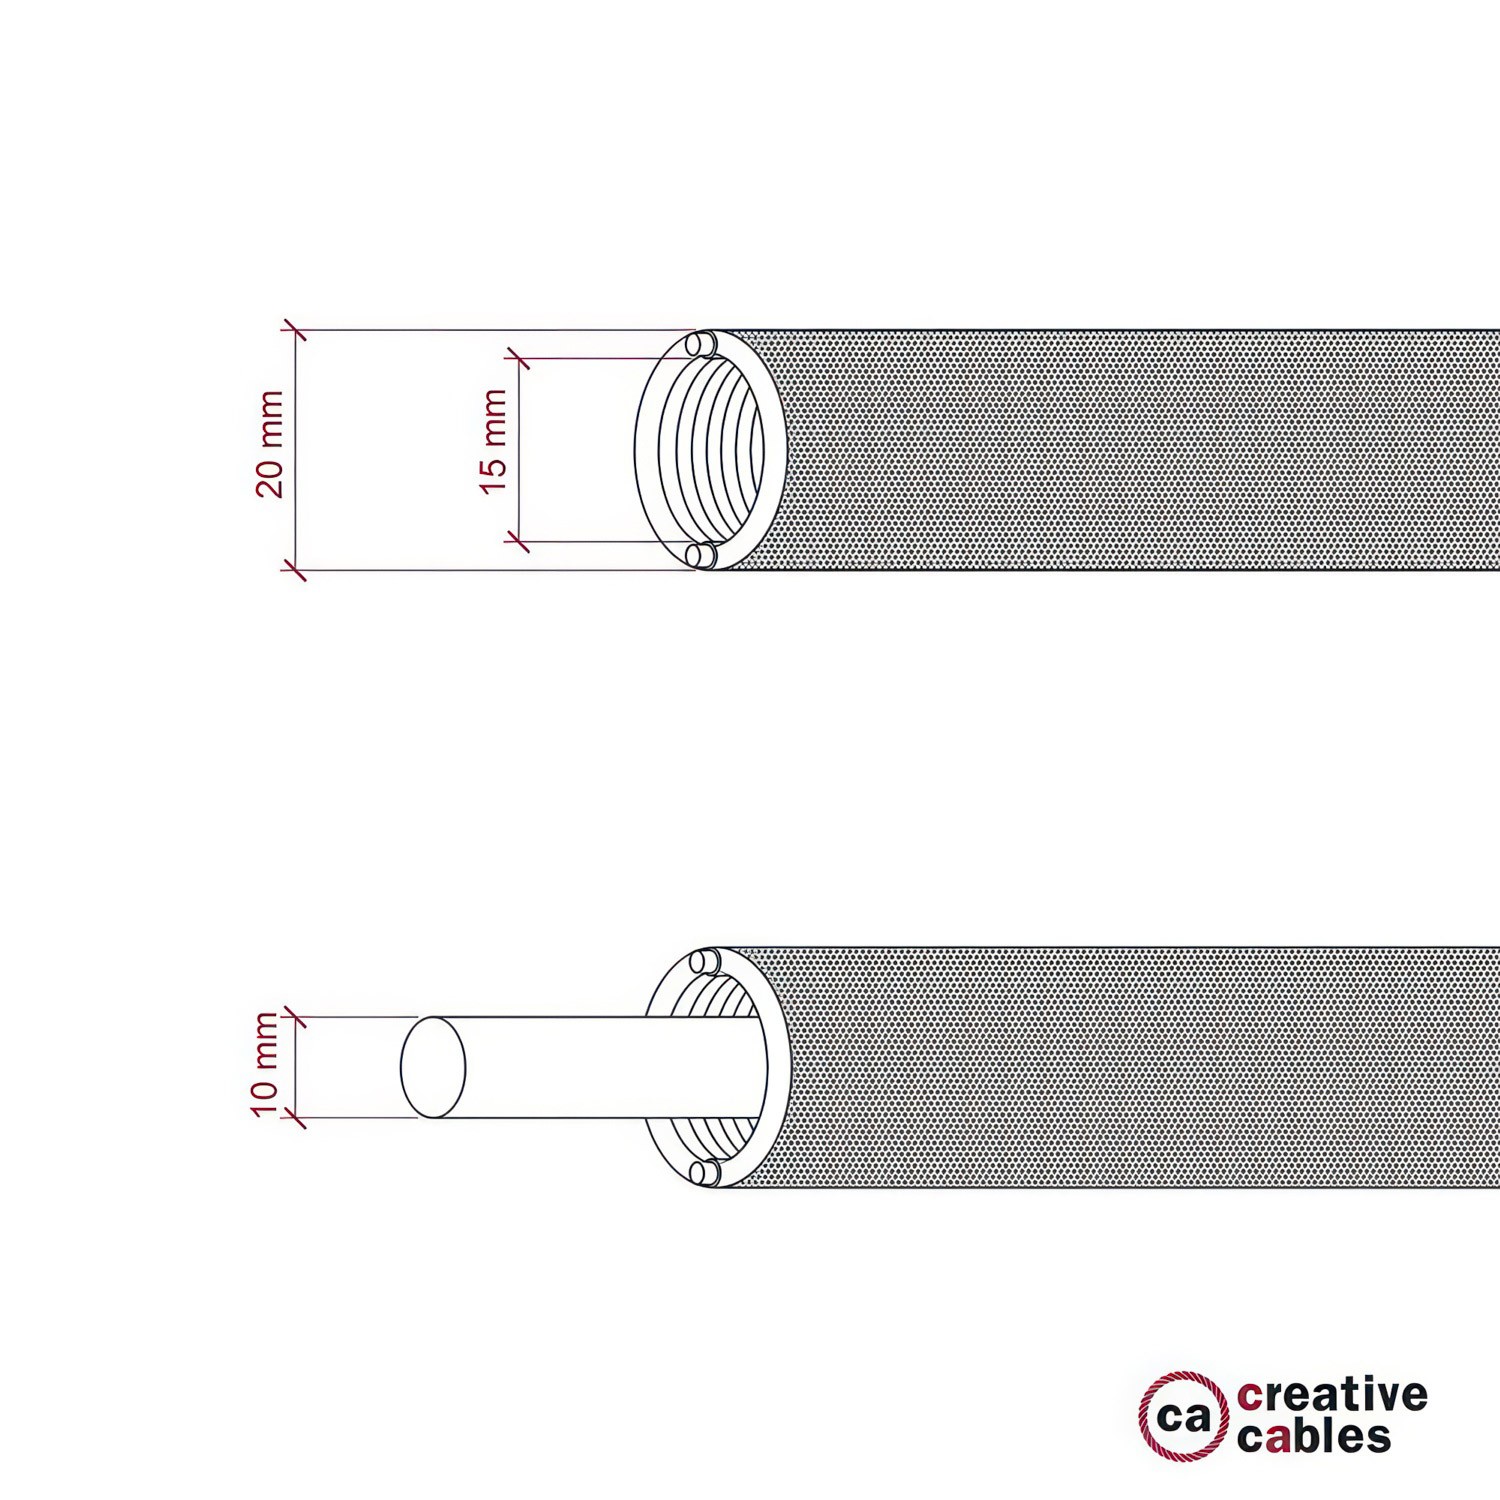 Tubo flexible Creative-Tube, revestido de tejido en Rayon Oro y Negro RZ24, diámetro 20 mm